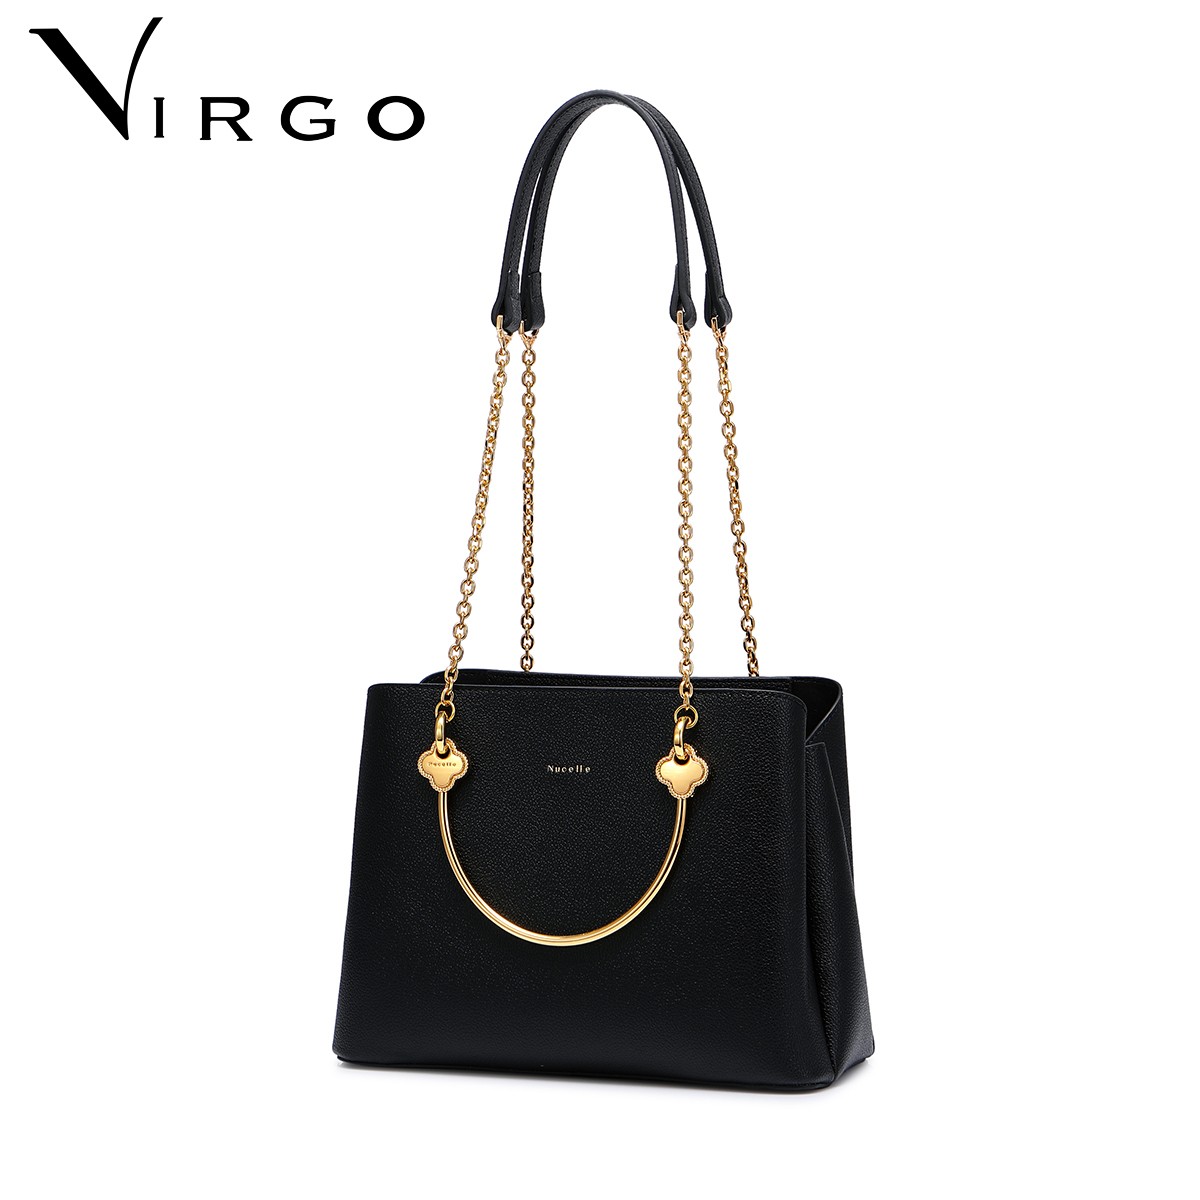 Túi xách nữ thời trang Nucelle Virgo VG667